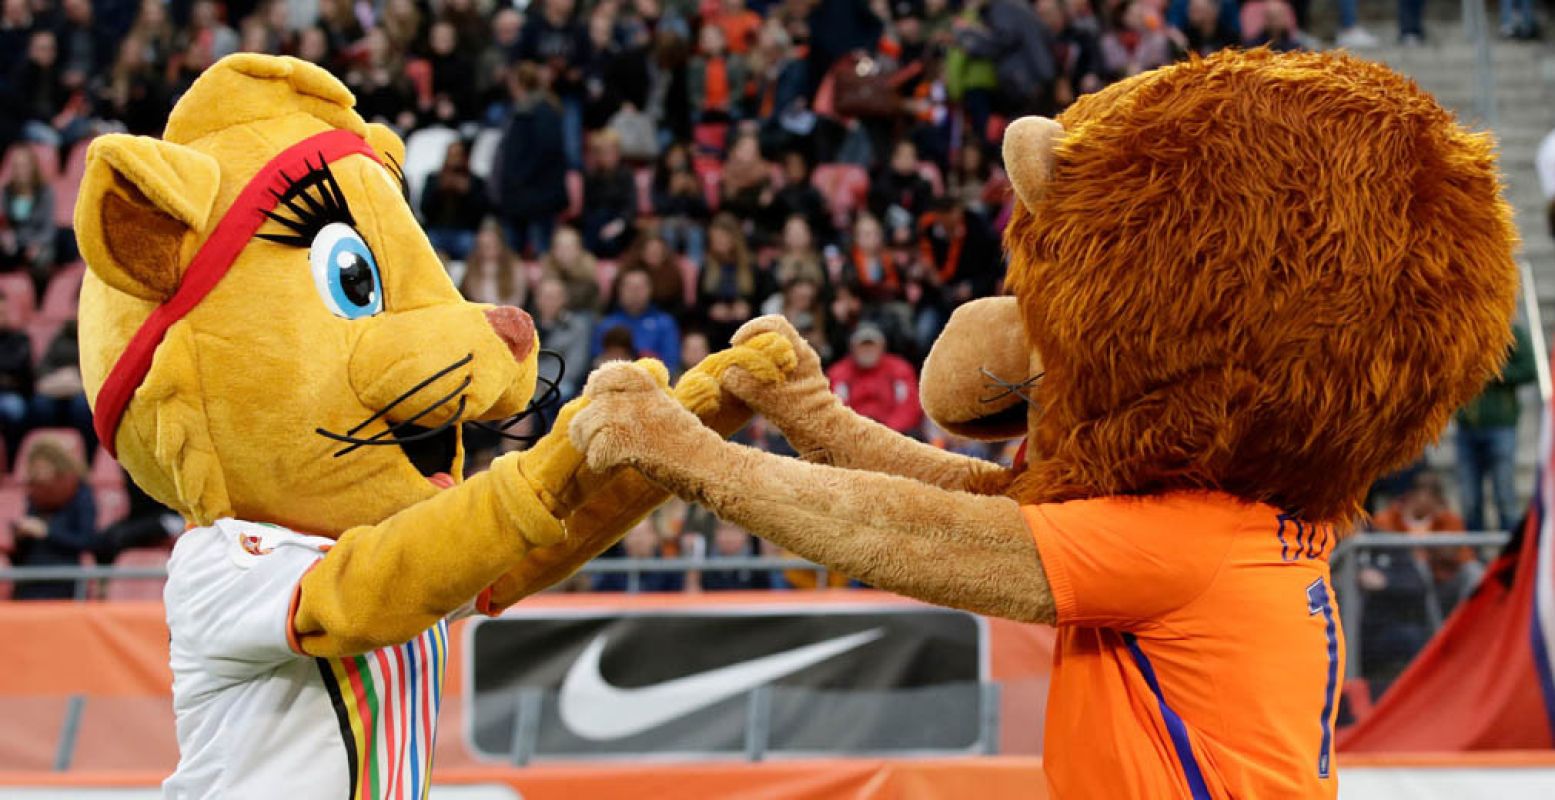 Kicky de Mascotte en Dutchy, de mascotte van het Nederlandse team. Foto: KNVB Media